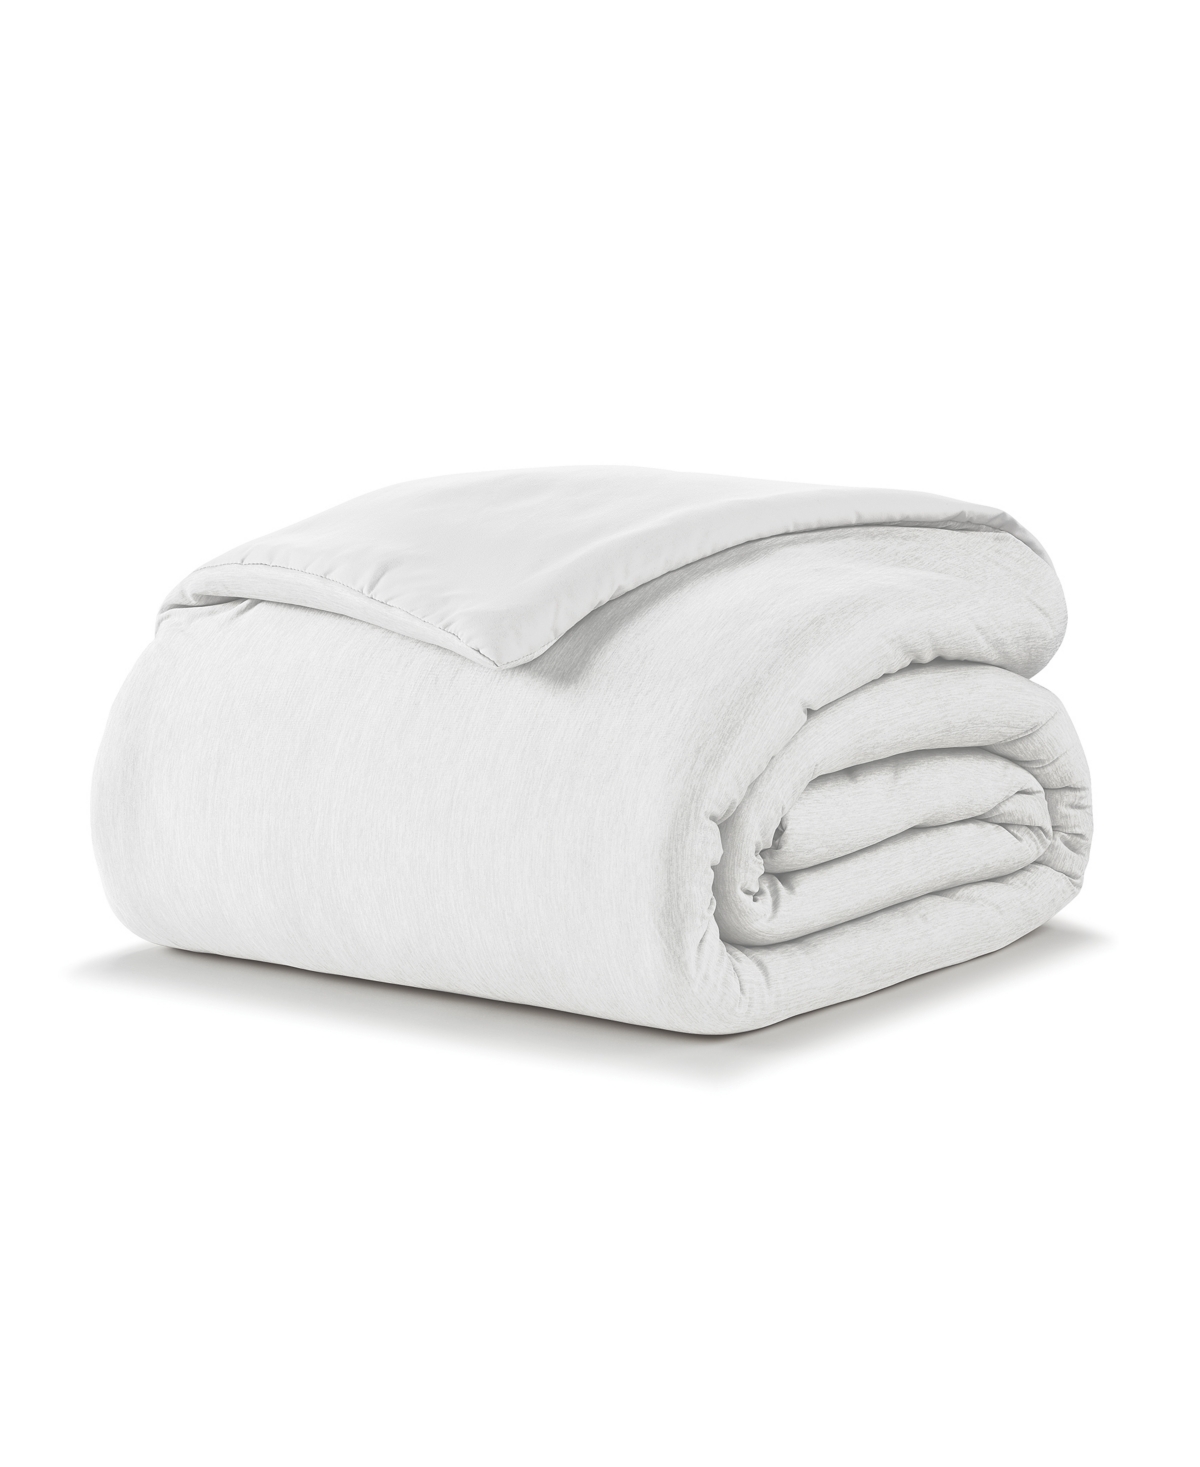 Ella Jayne Cooling Jersey Down-alternative Comforter, Full/queen In White